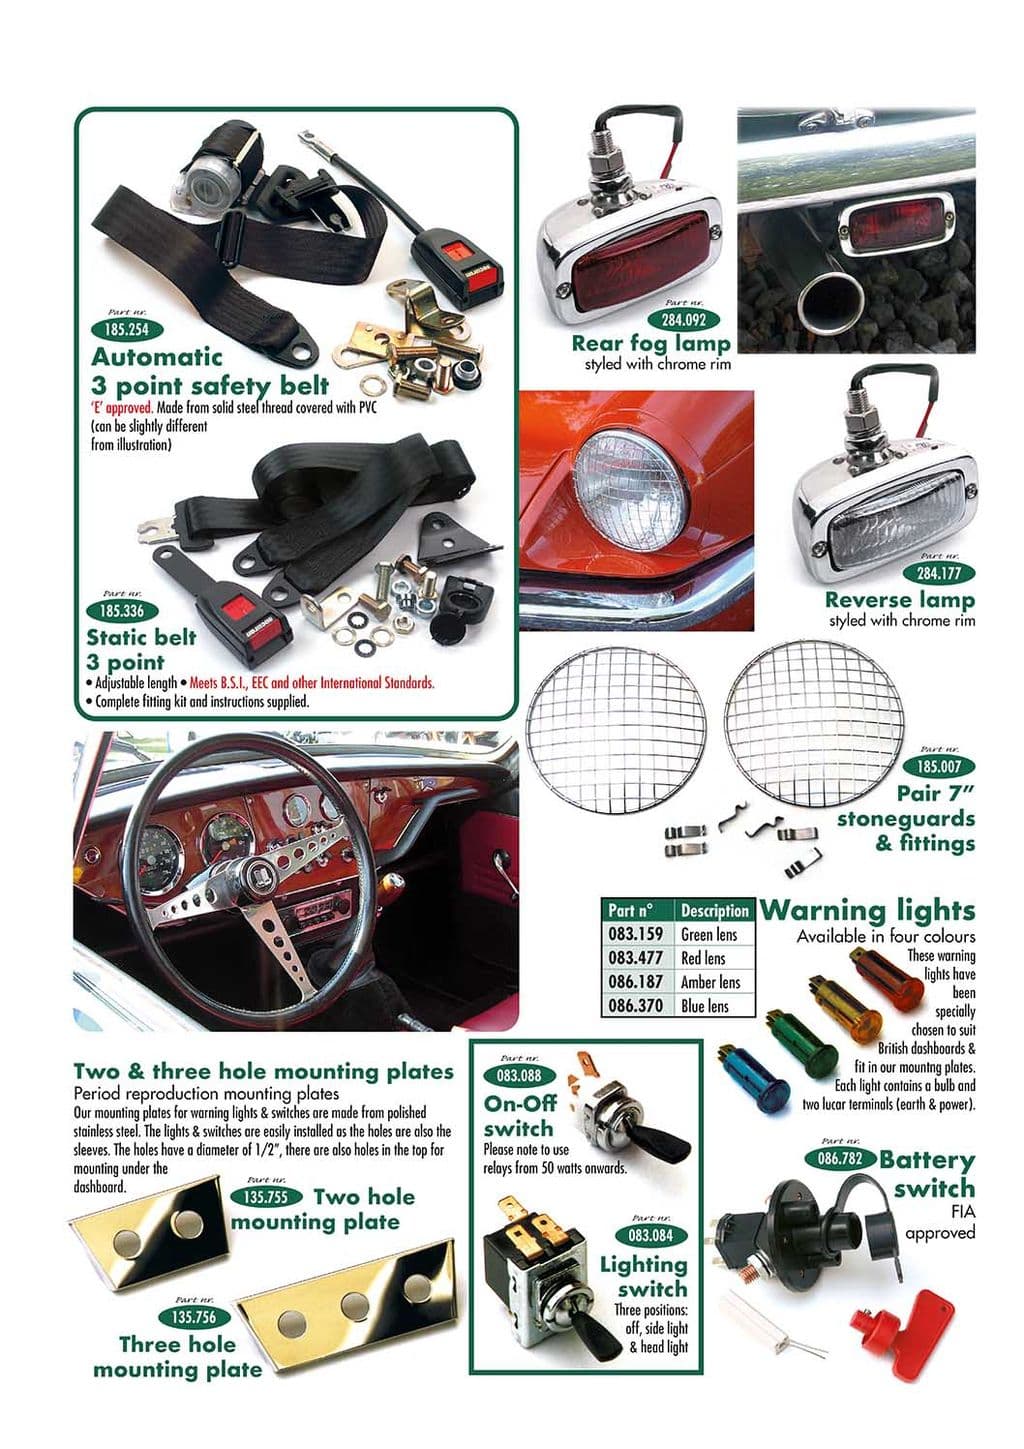 Safety parts & accessories - Safety parts - Maintenance & storage - Land Rover Defender 90-110 1984-2006 - Safety parts & accessories - 1